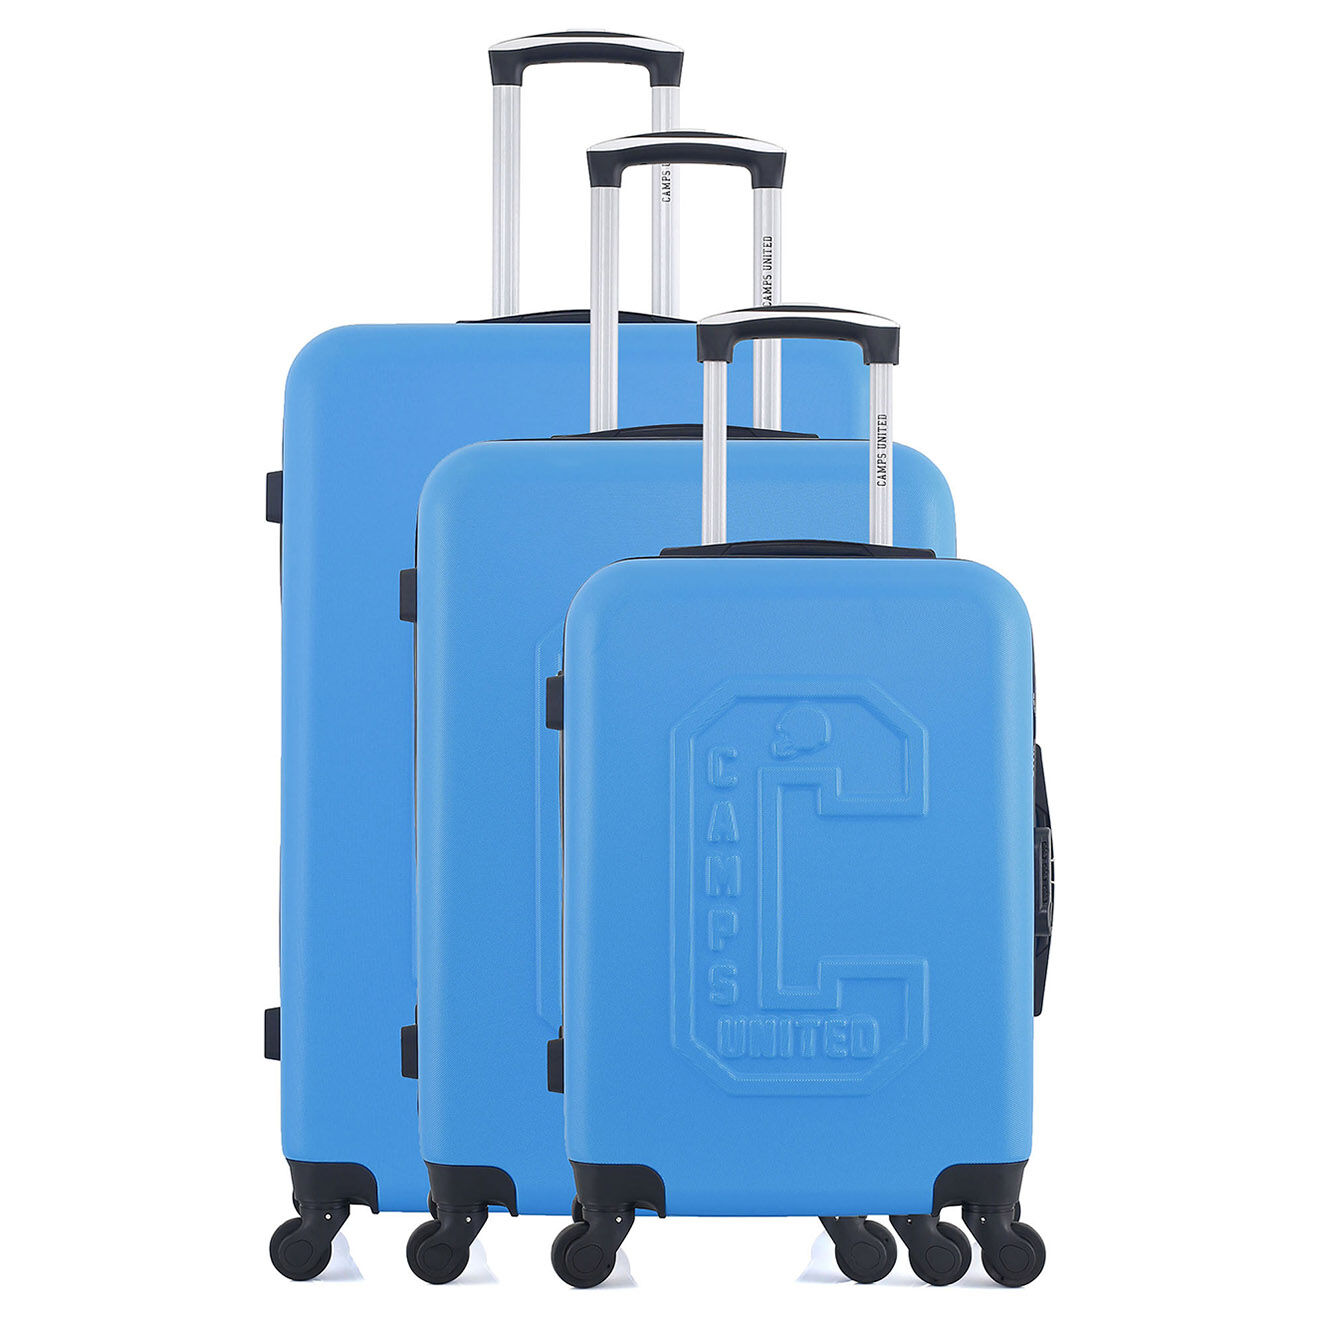 camps united - 3 valises 4 roues simples ucla 75/65/55 cm bleue